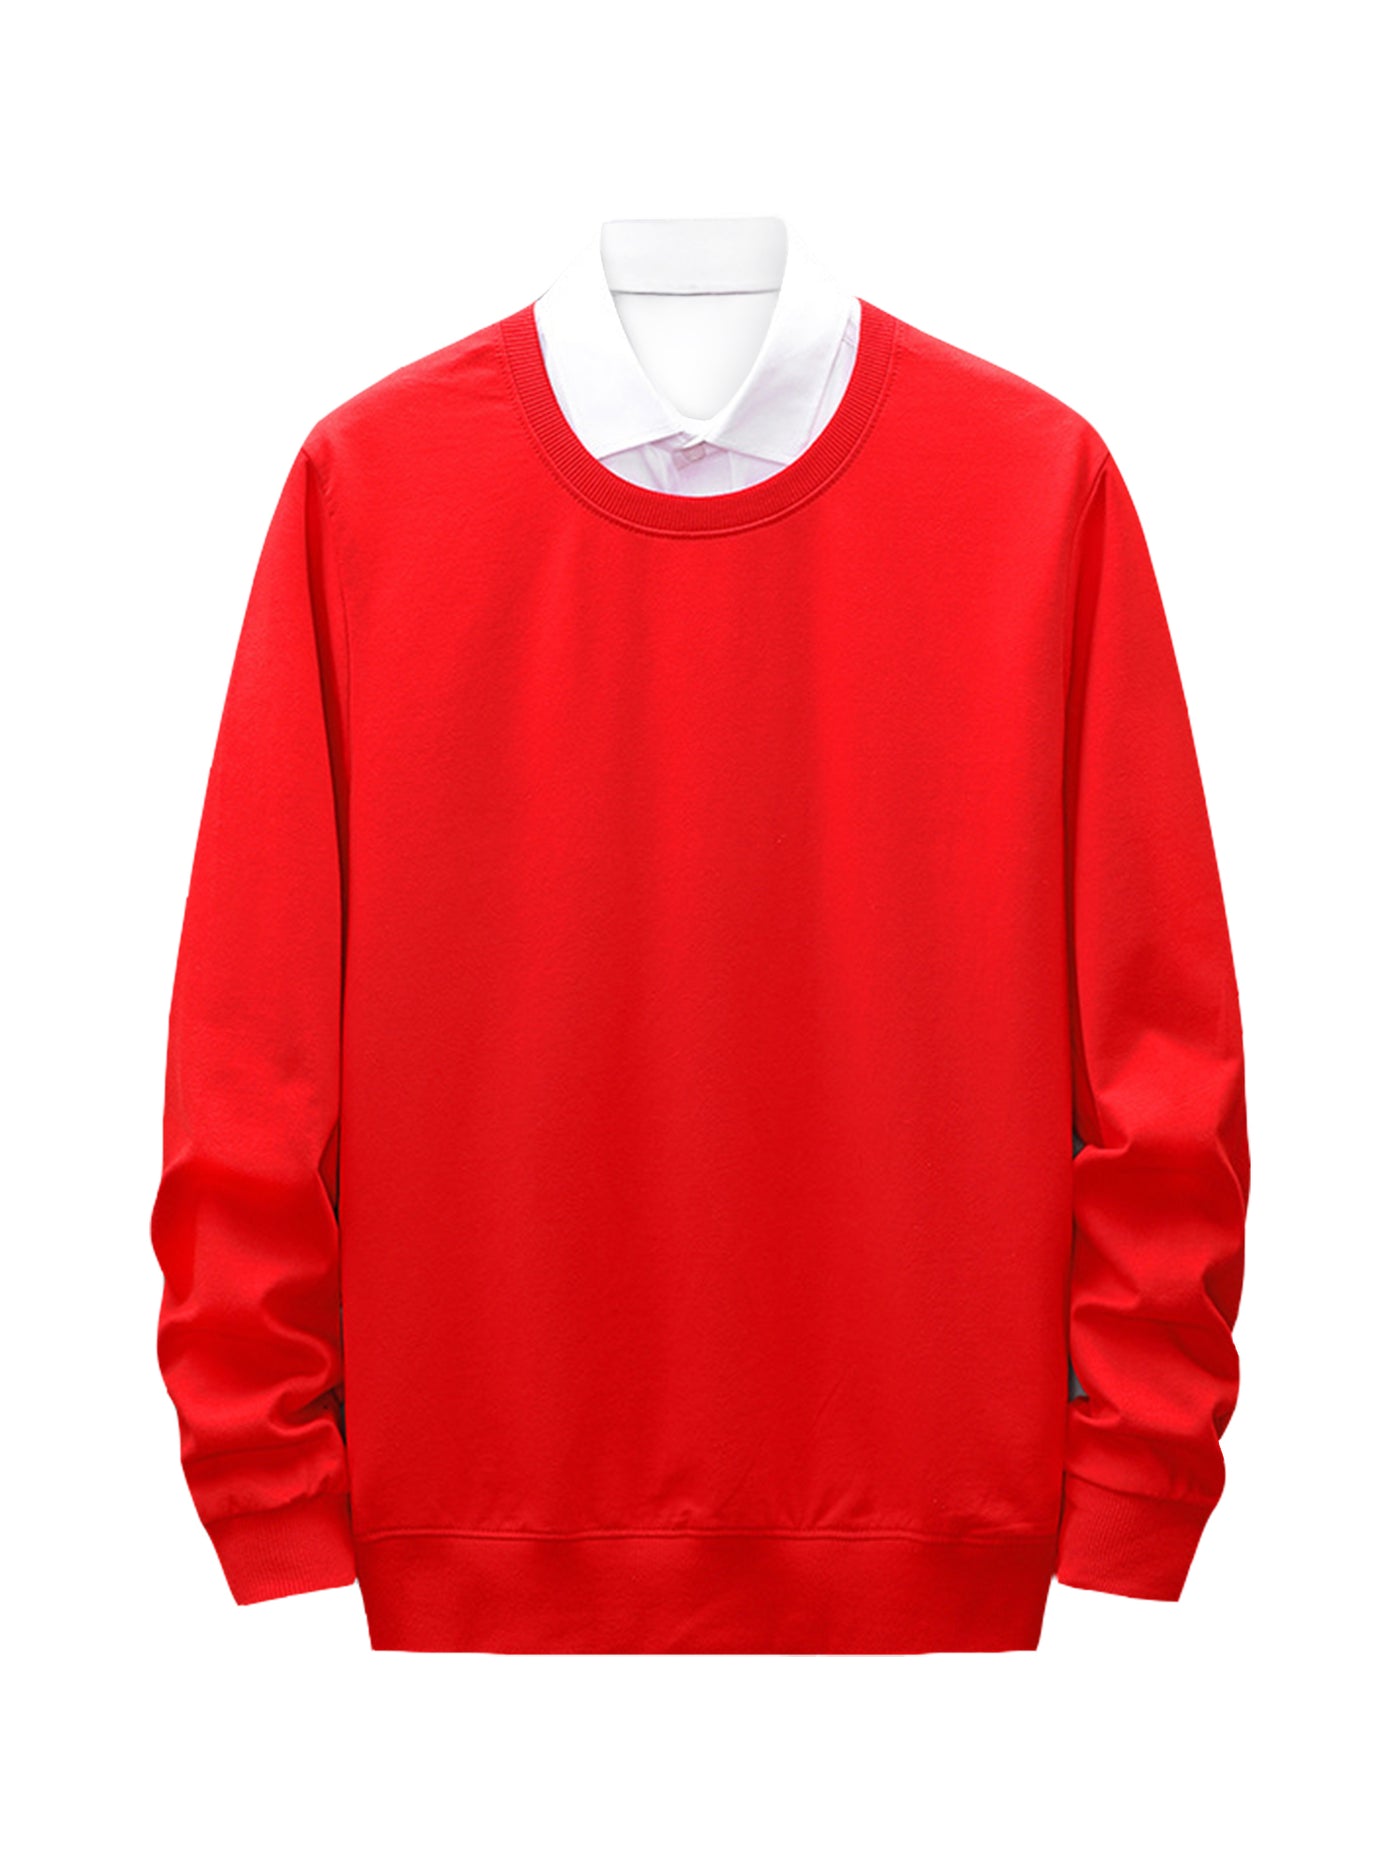 Bublédon Men's Classic Sweatshirt Crew Neck Regular Fit Long Sleeves Solid Basic Pullover